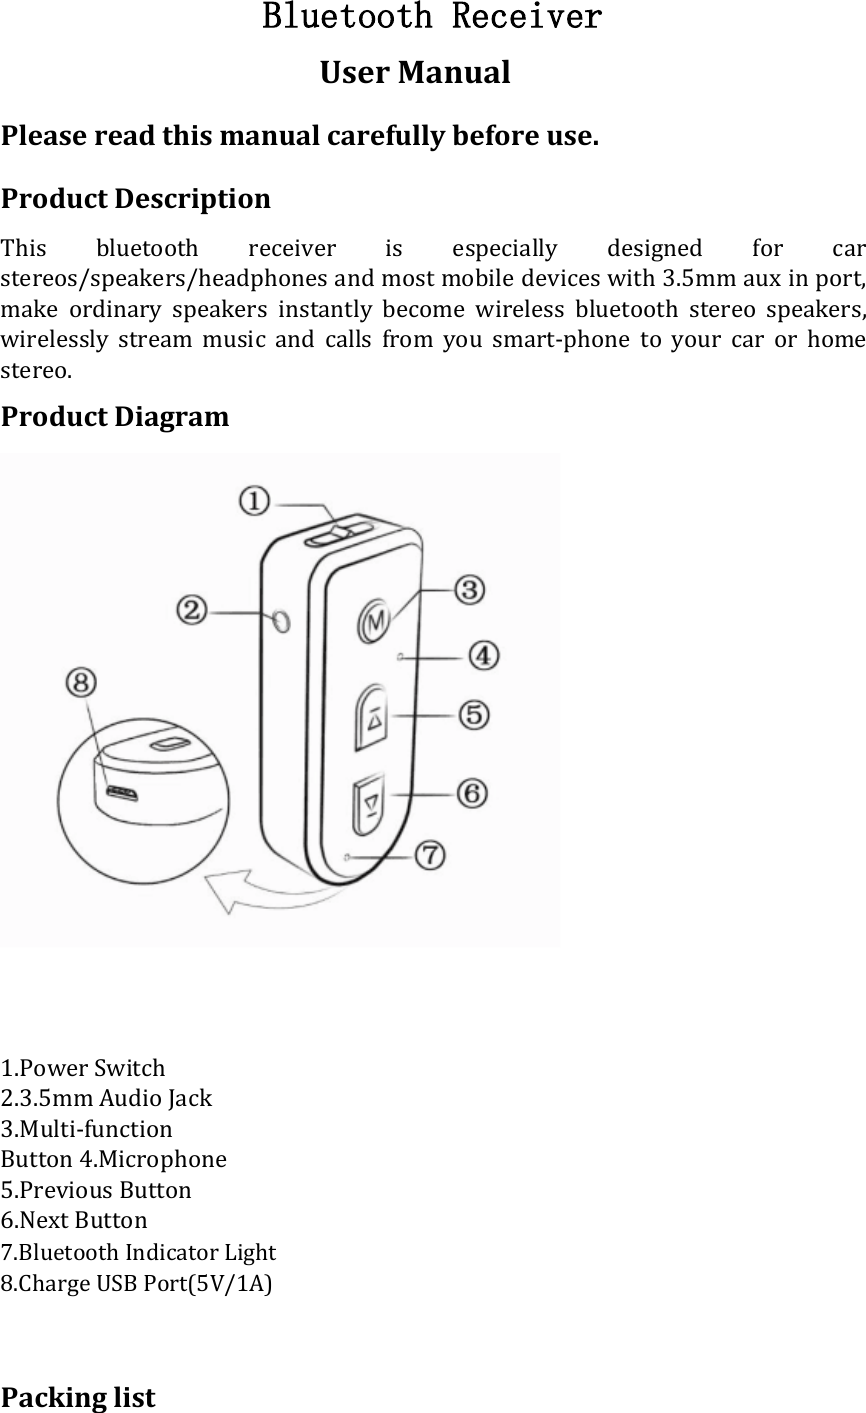 avantek bluetooth fm transmitter manual